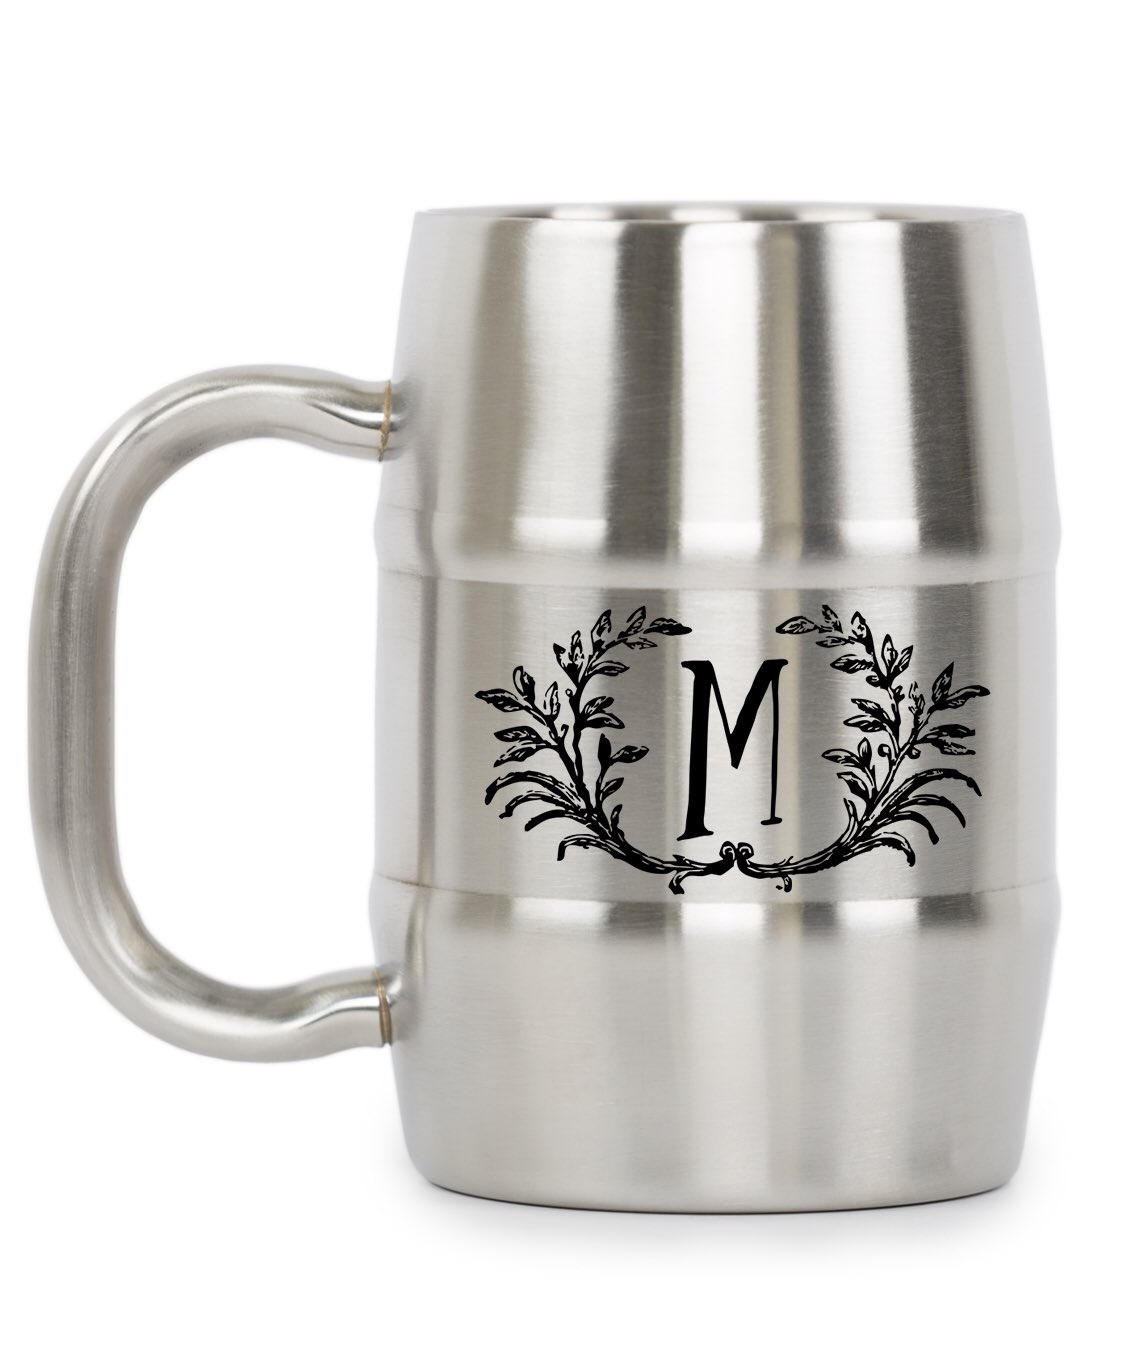 The Mug, #TheMug